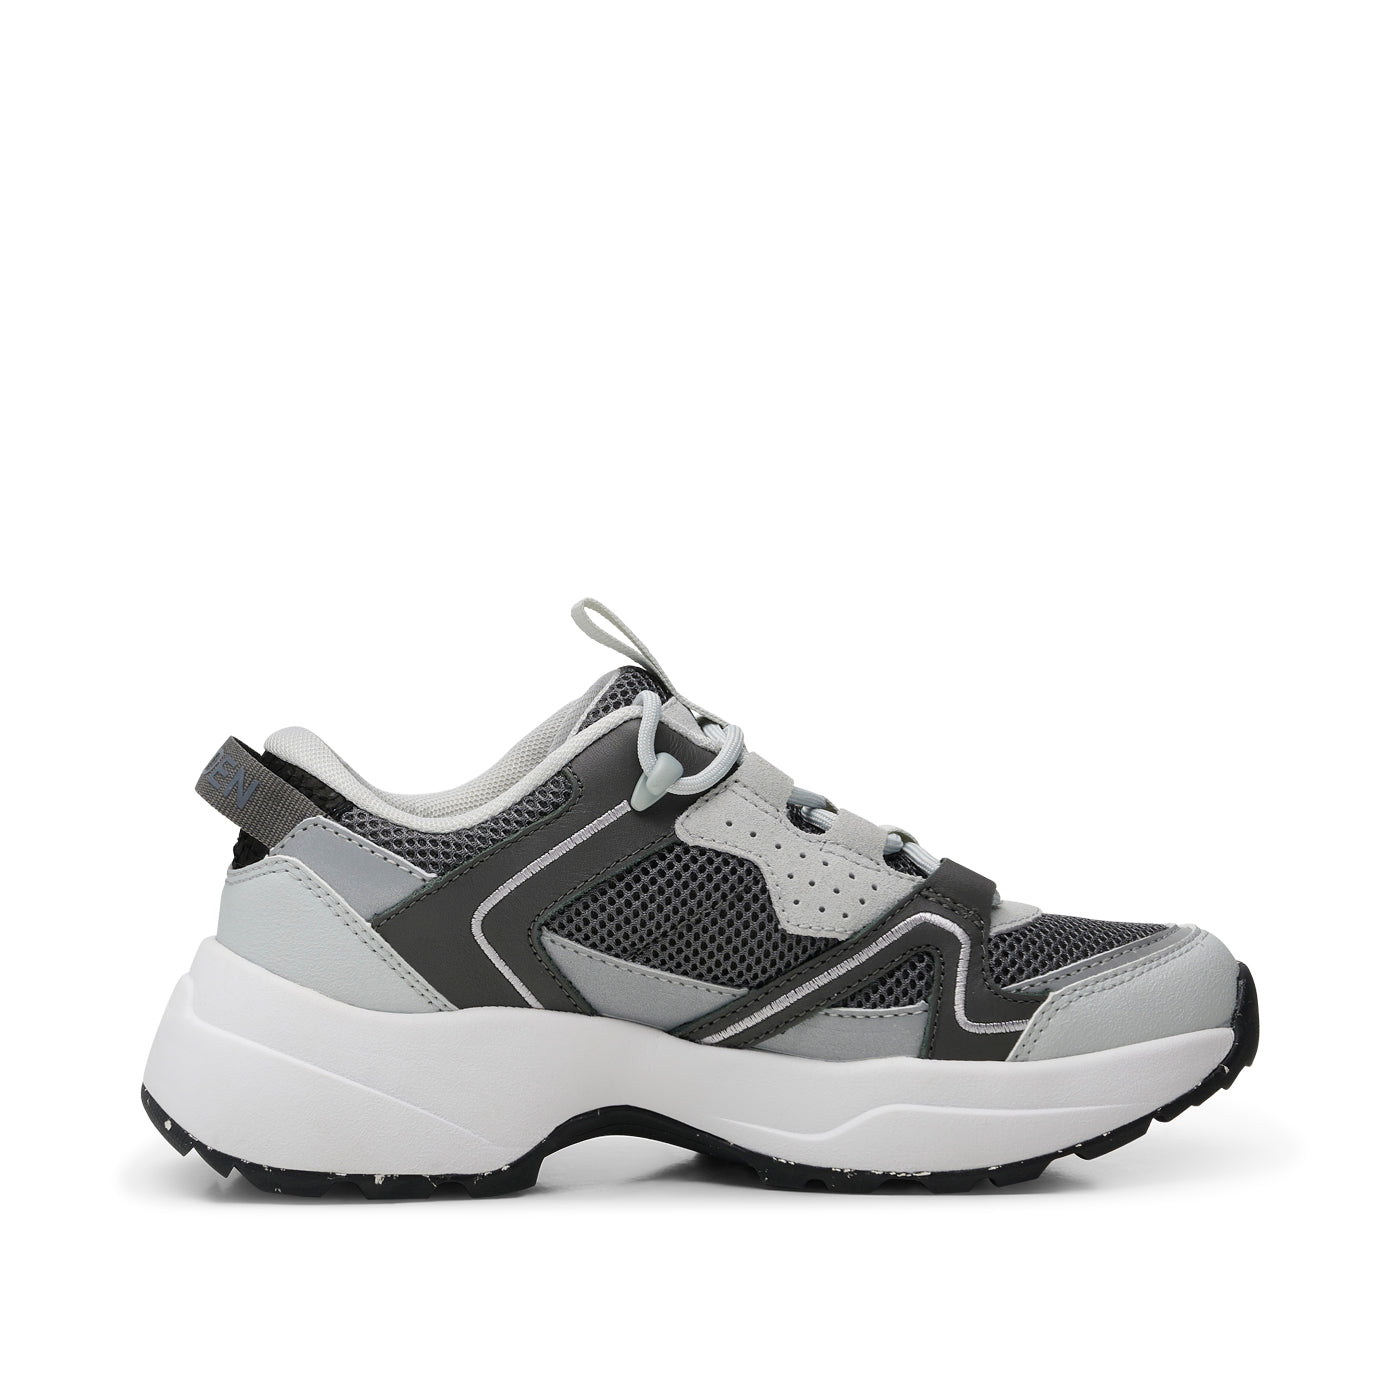 WODEN Sif Reflective Sneakers 051 Dark Grey